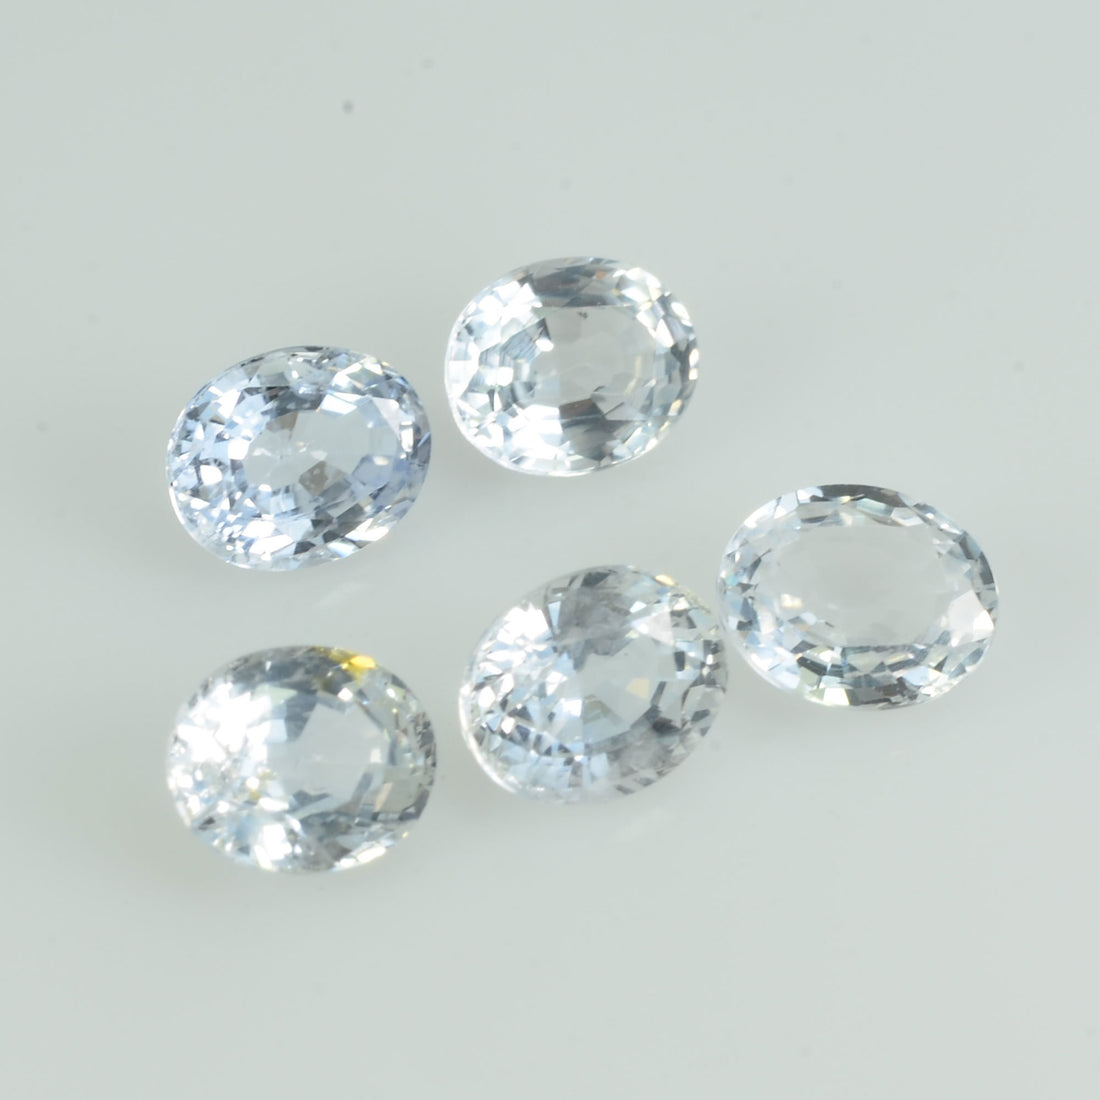 5X4 Natural White Sapphire Loose  Gemstone Oval Cut - Thai Gems Export Ltd.